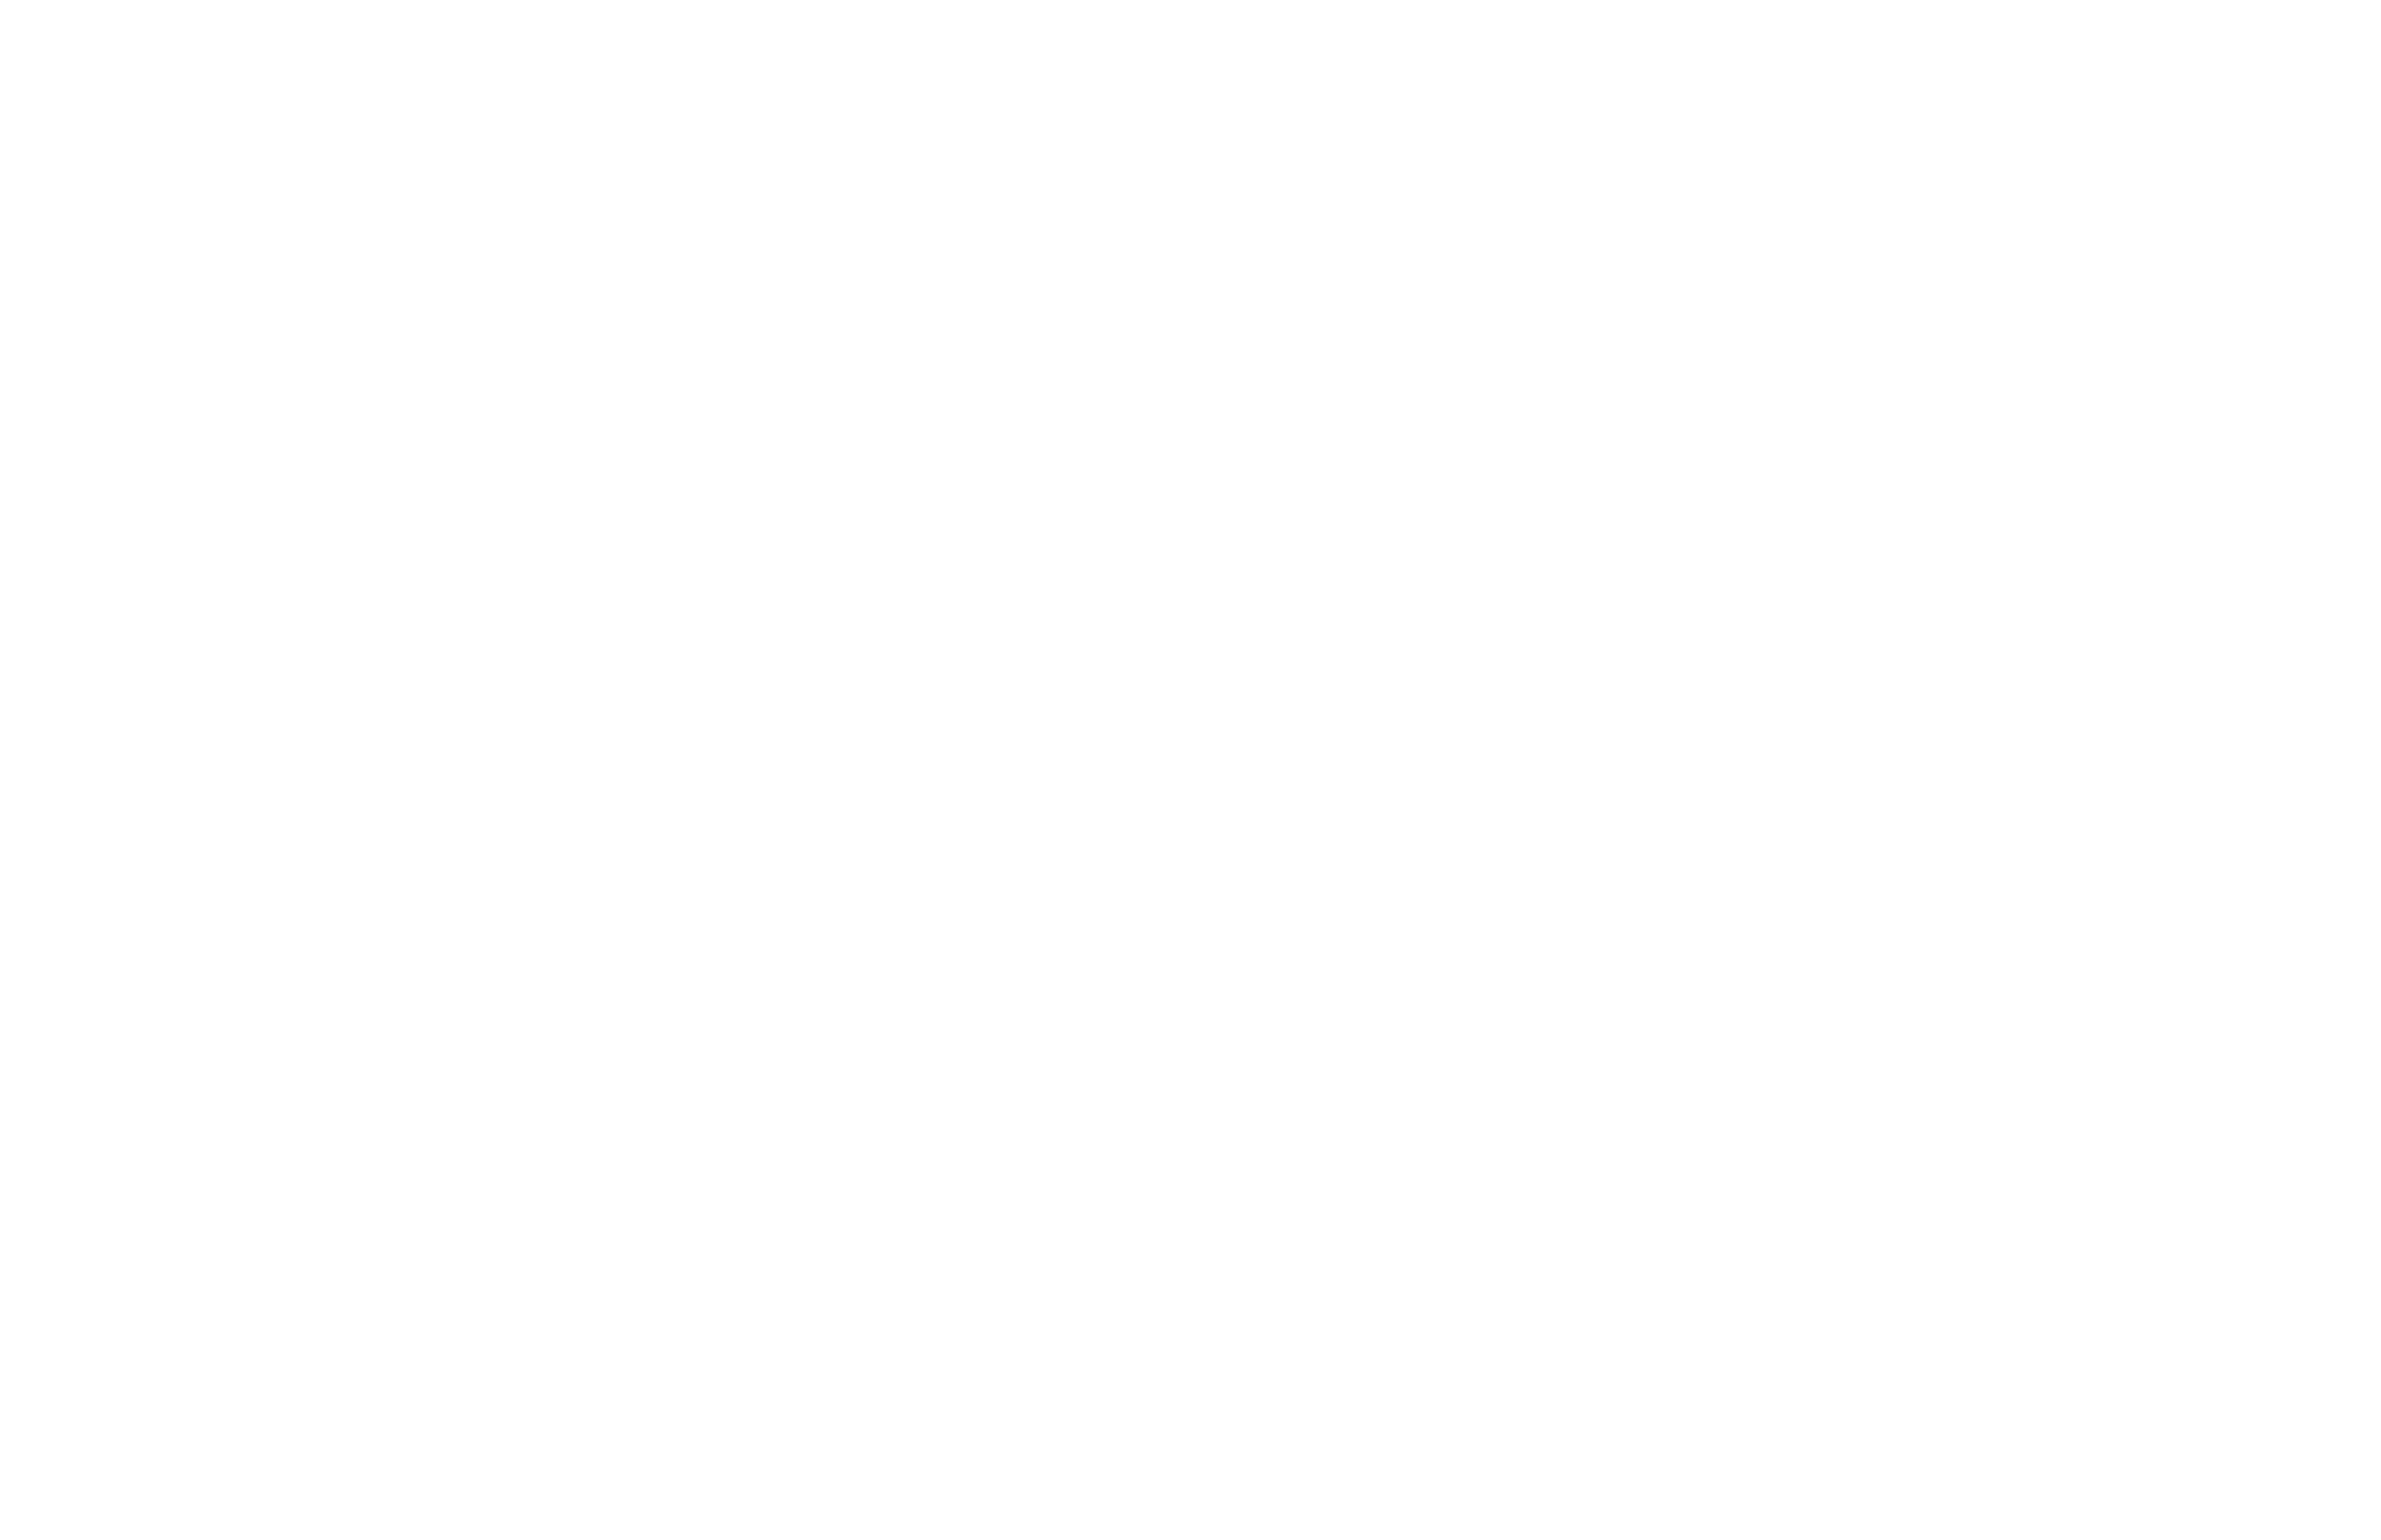 Reporters d'Espoirs